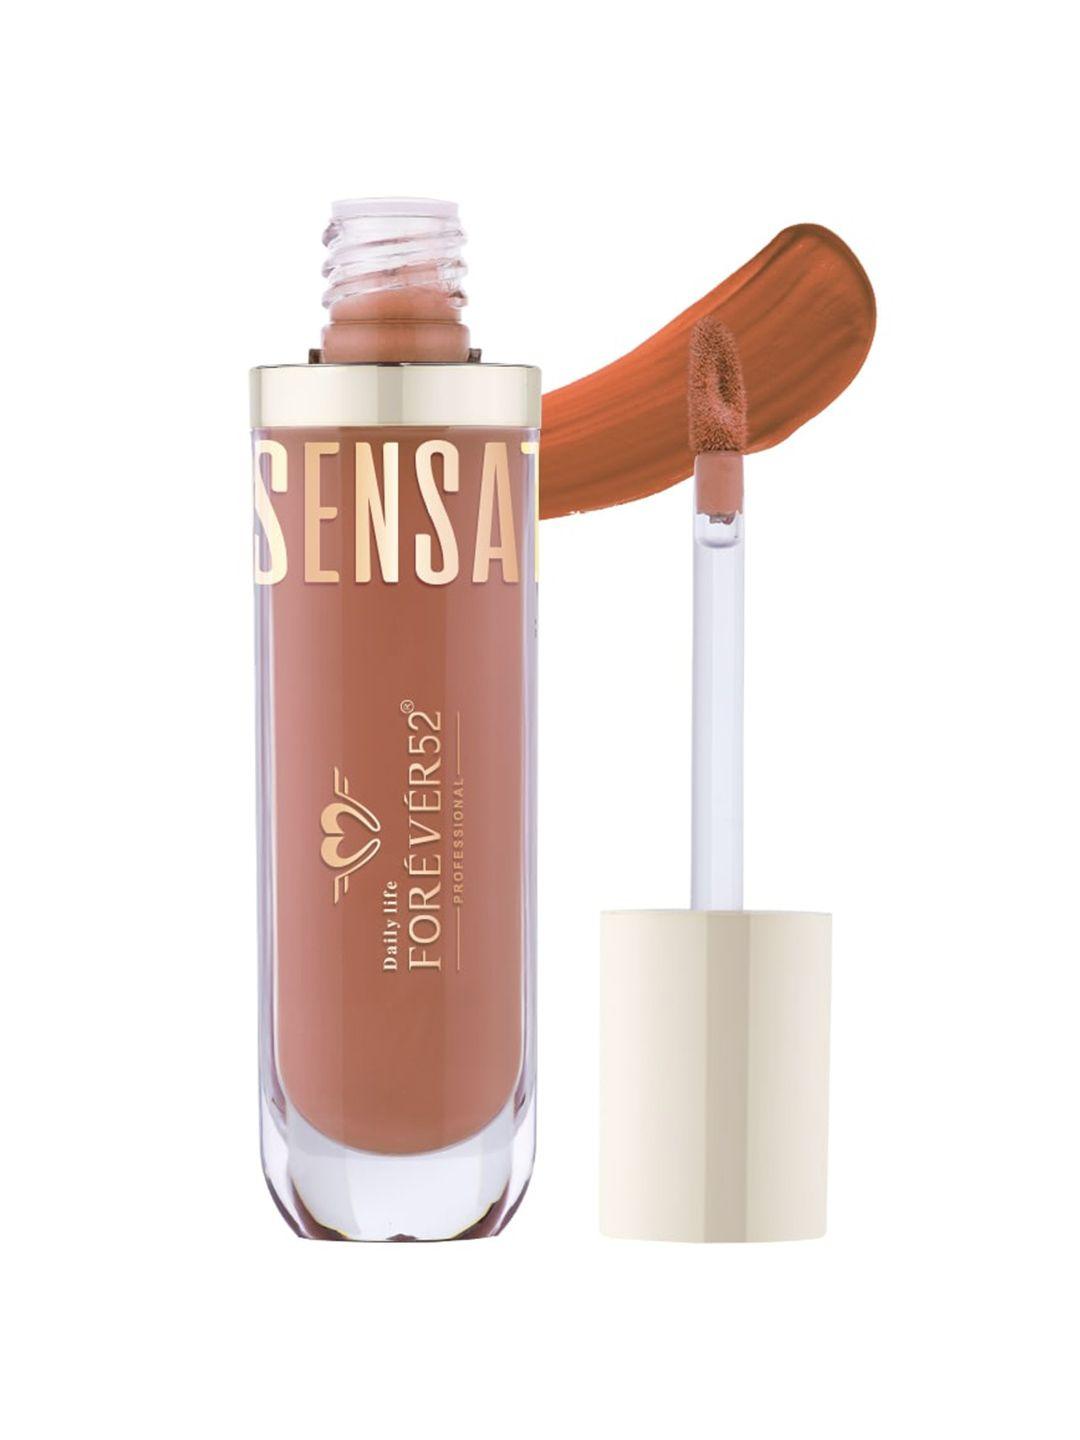 daily life forever52 sensational long lasting liquid lipstick 6ml - caramel nude 007